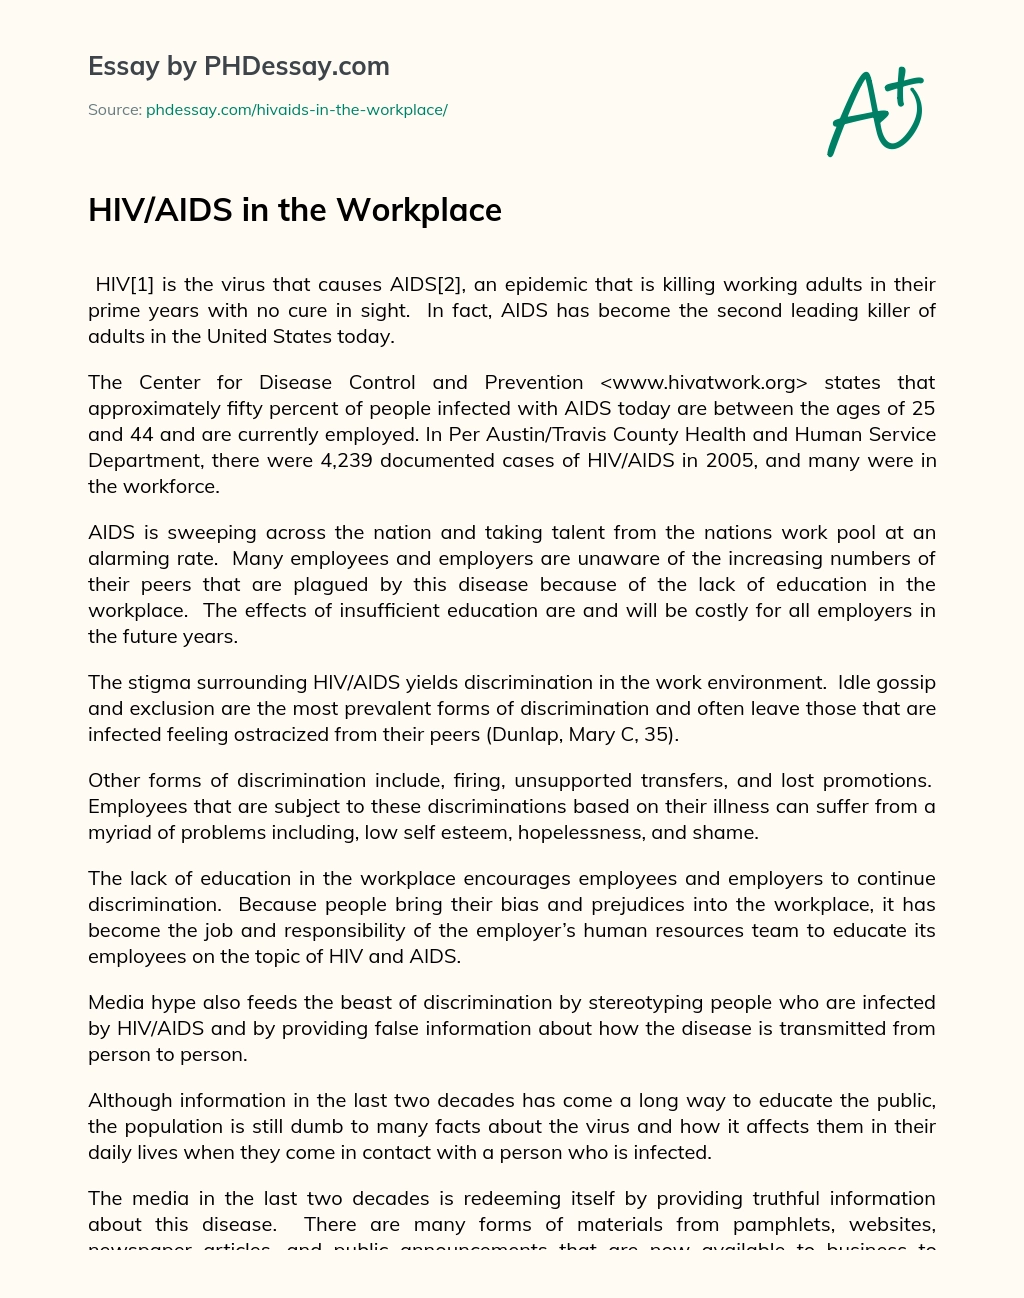 hiv awareness essay